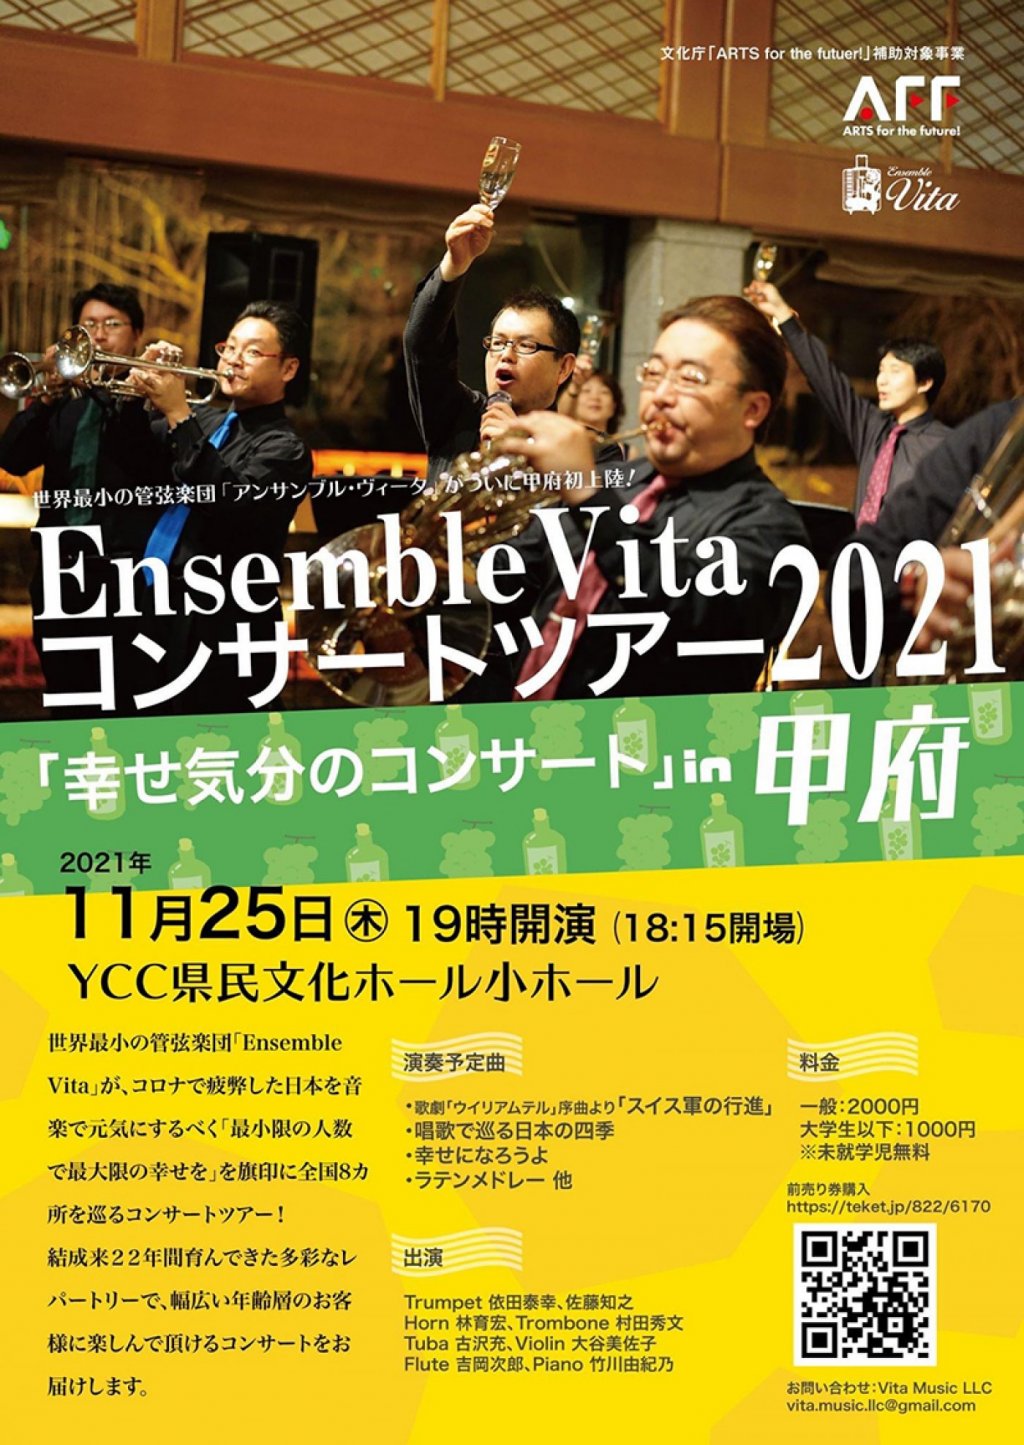 Ensemble VITA 幸せ気分のコンサート in 甲府